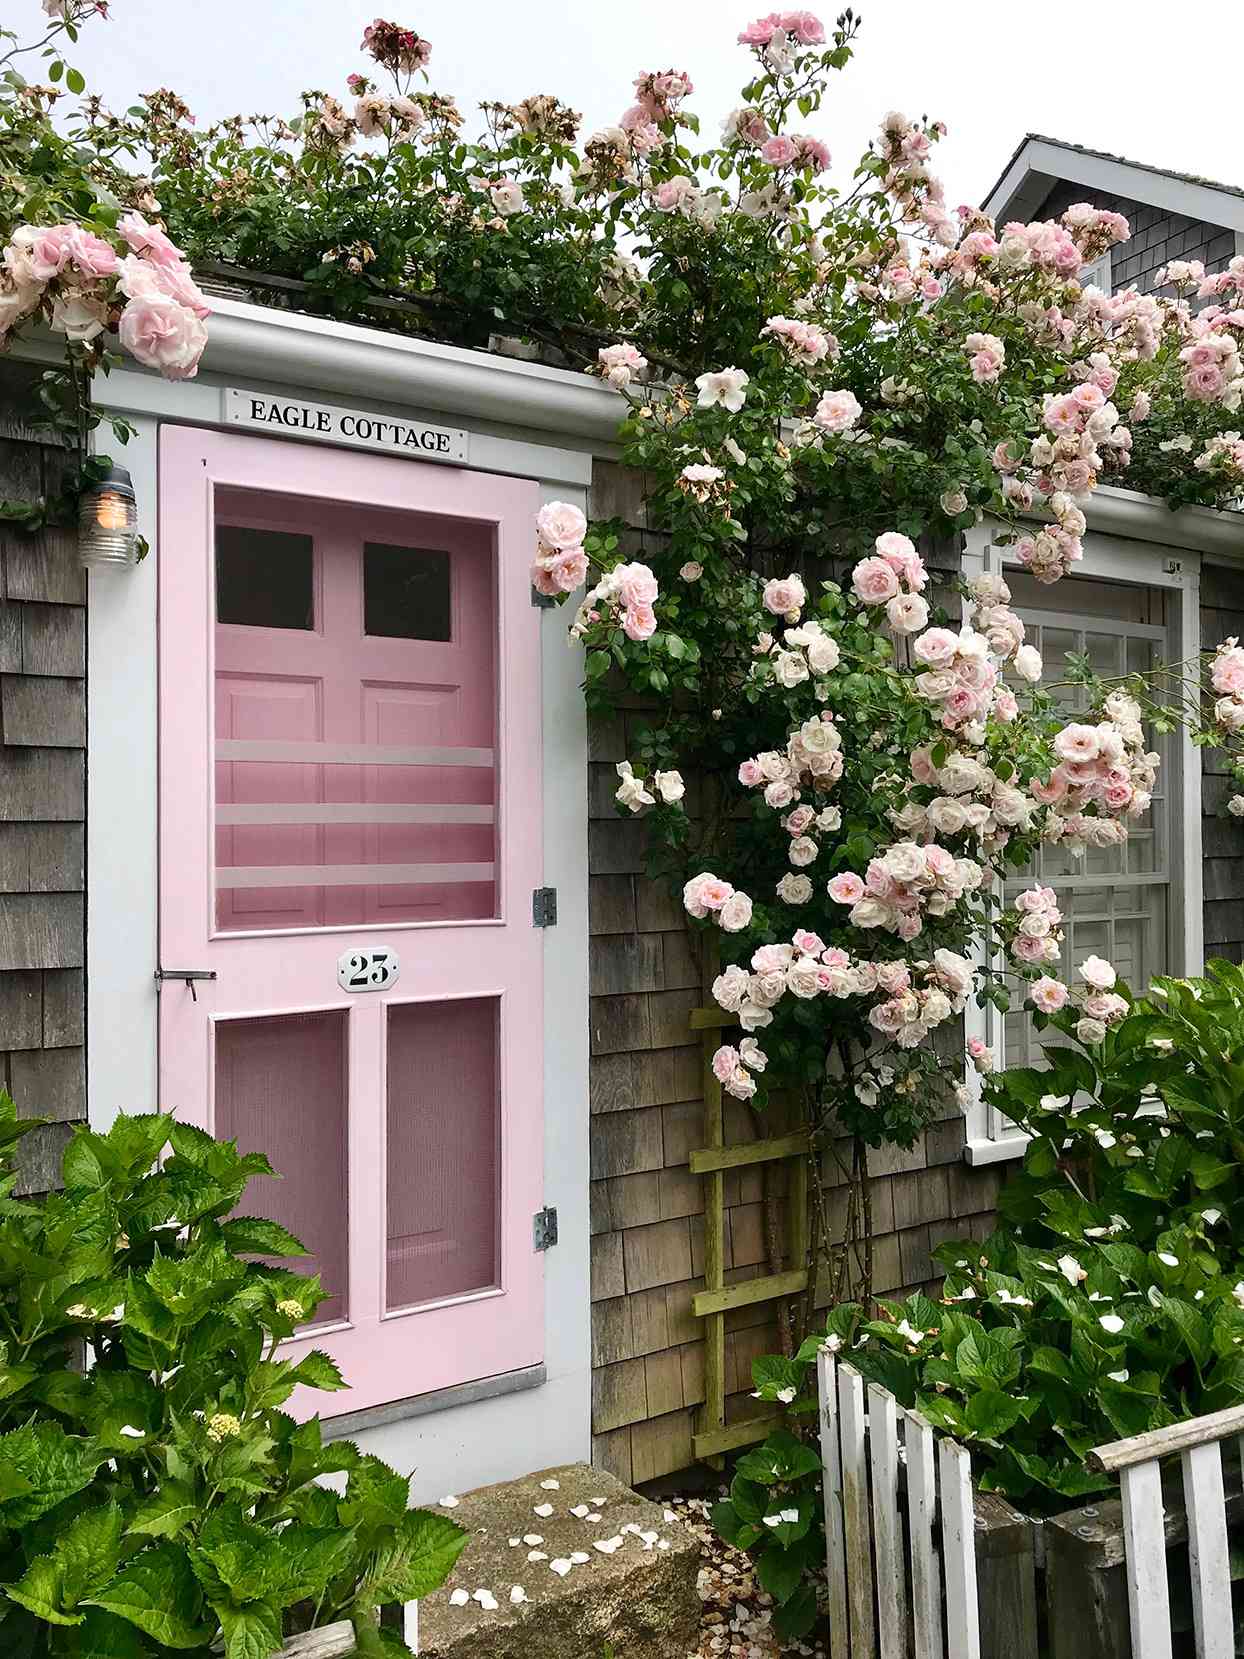 New Dawn roses climb a house around a light pink door